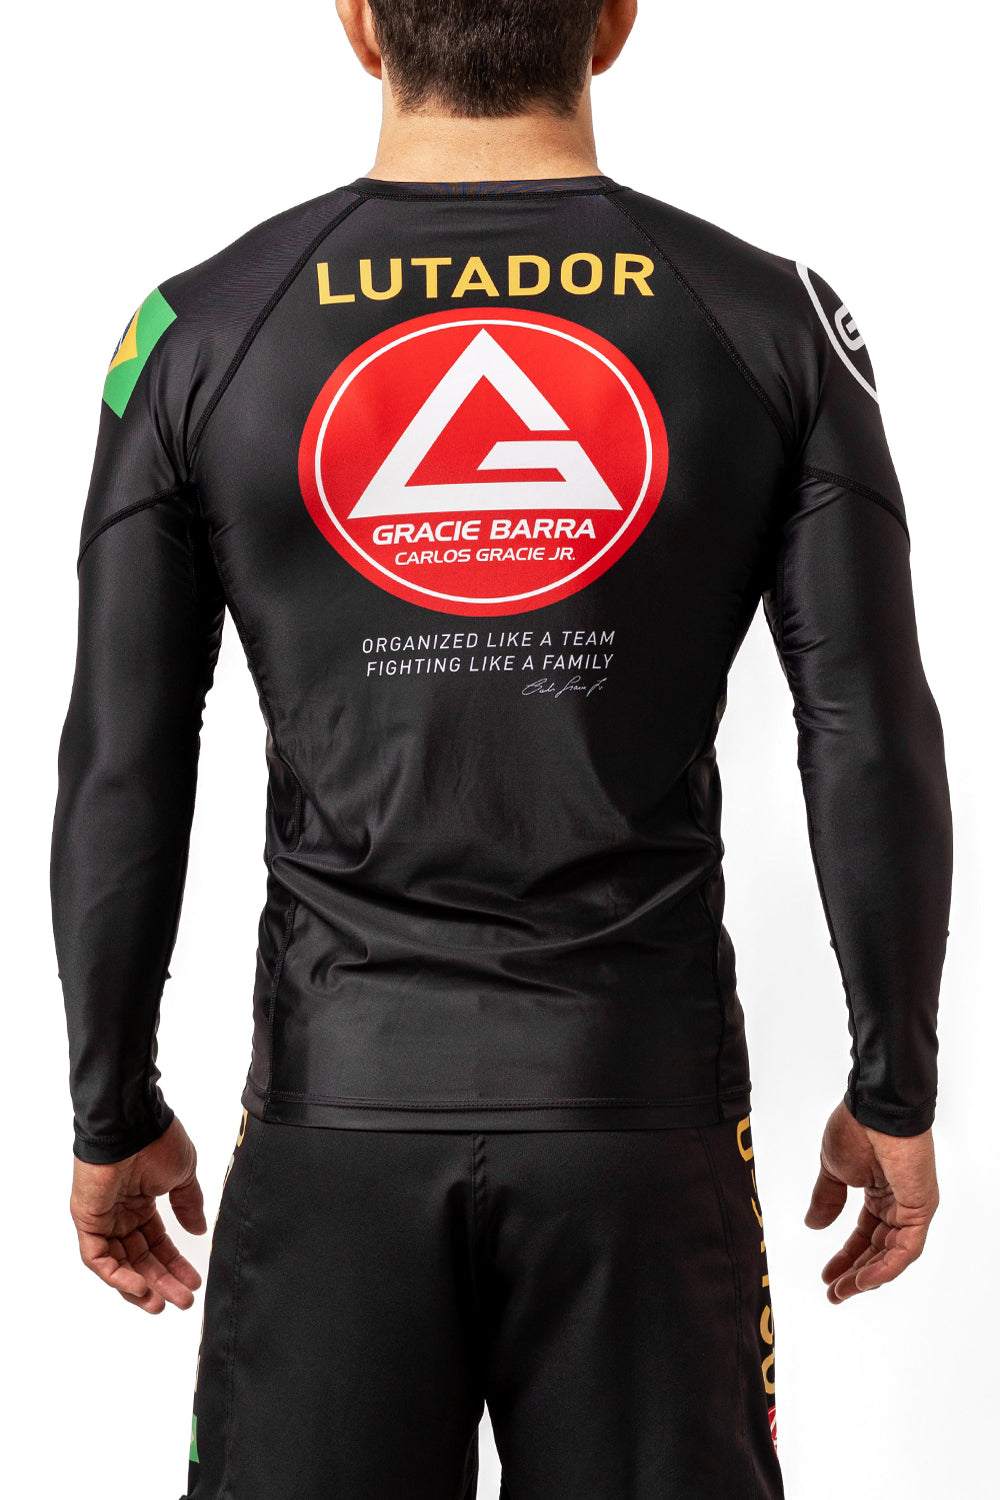 Rashguard Lutador GB M/L - Preta